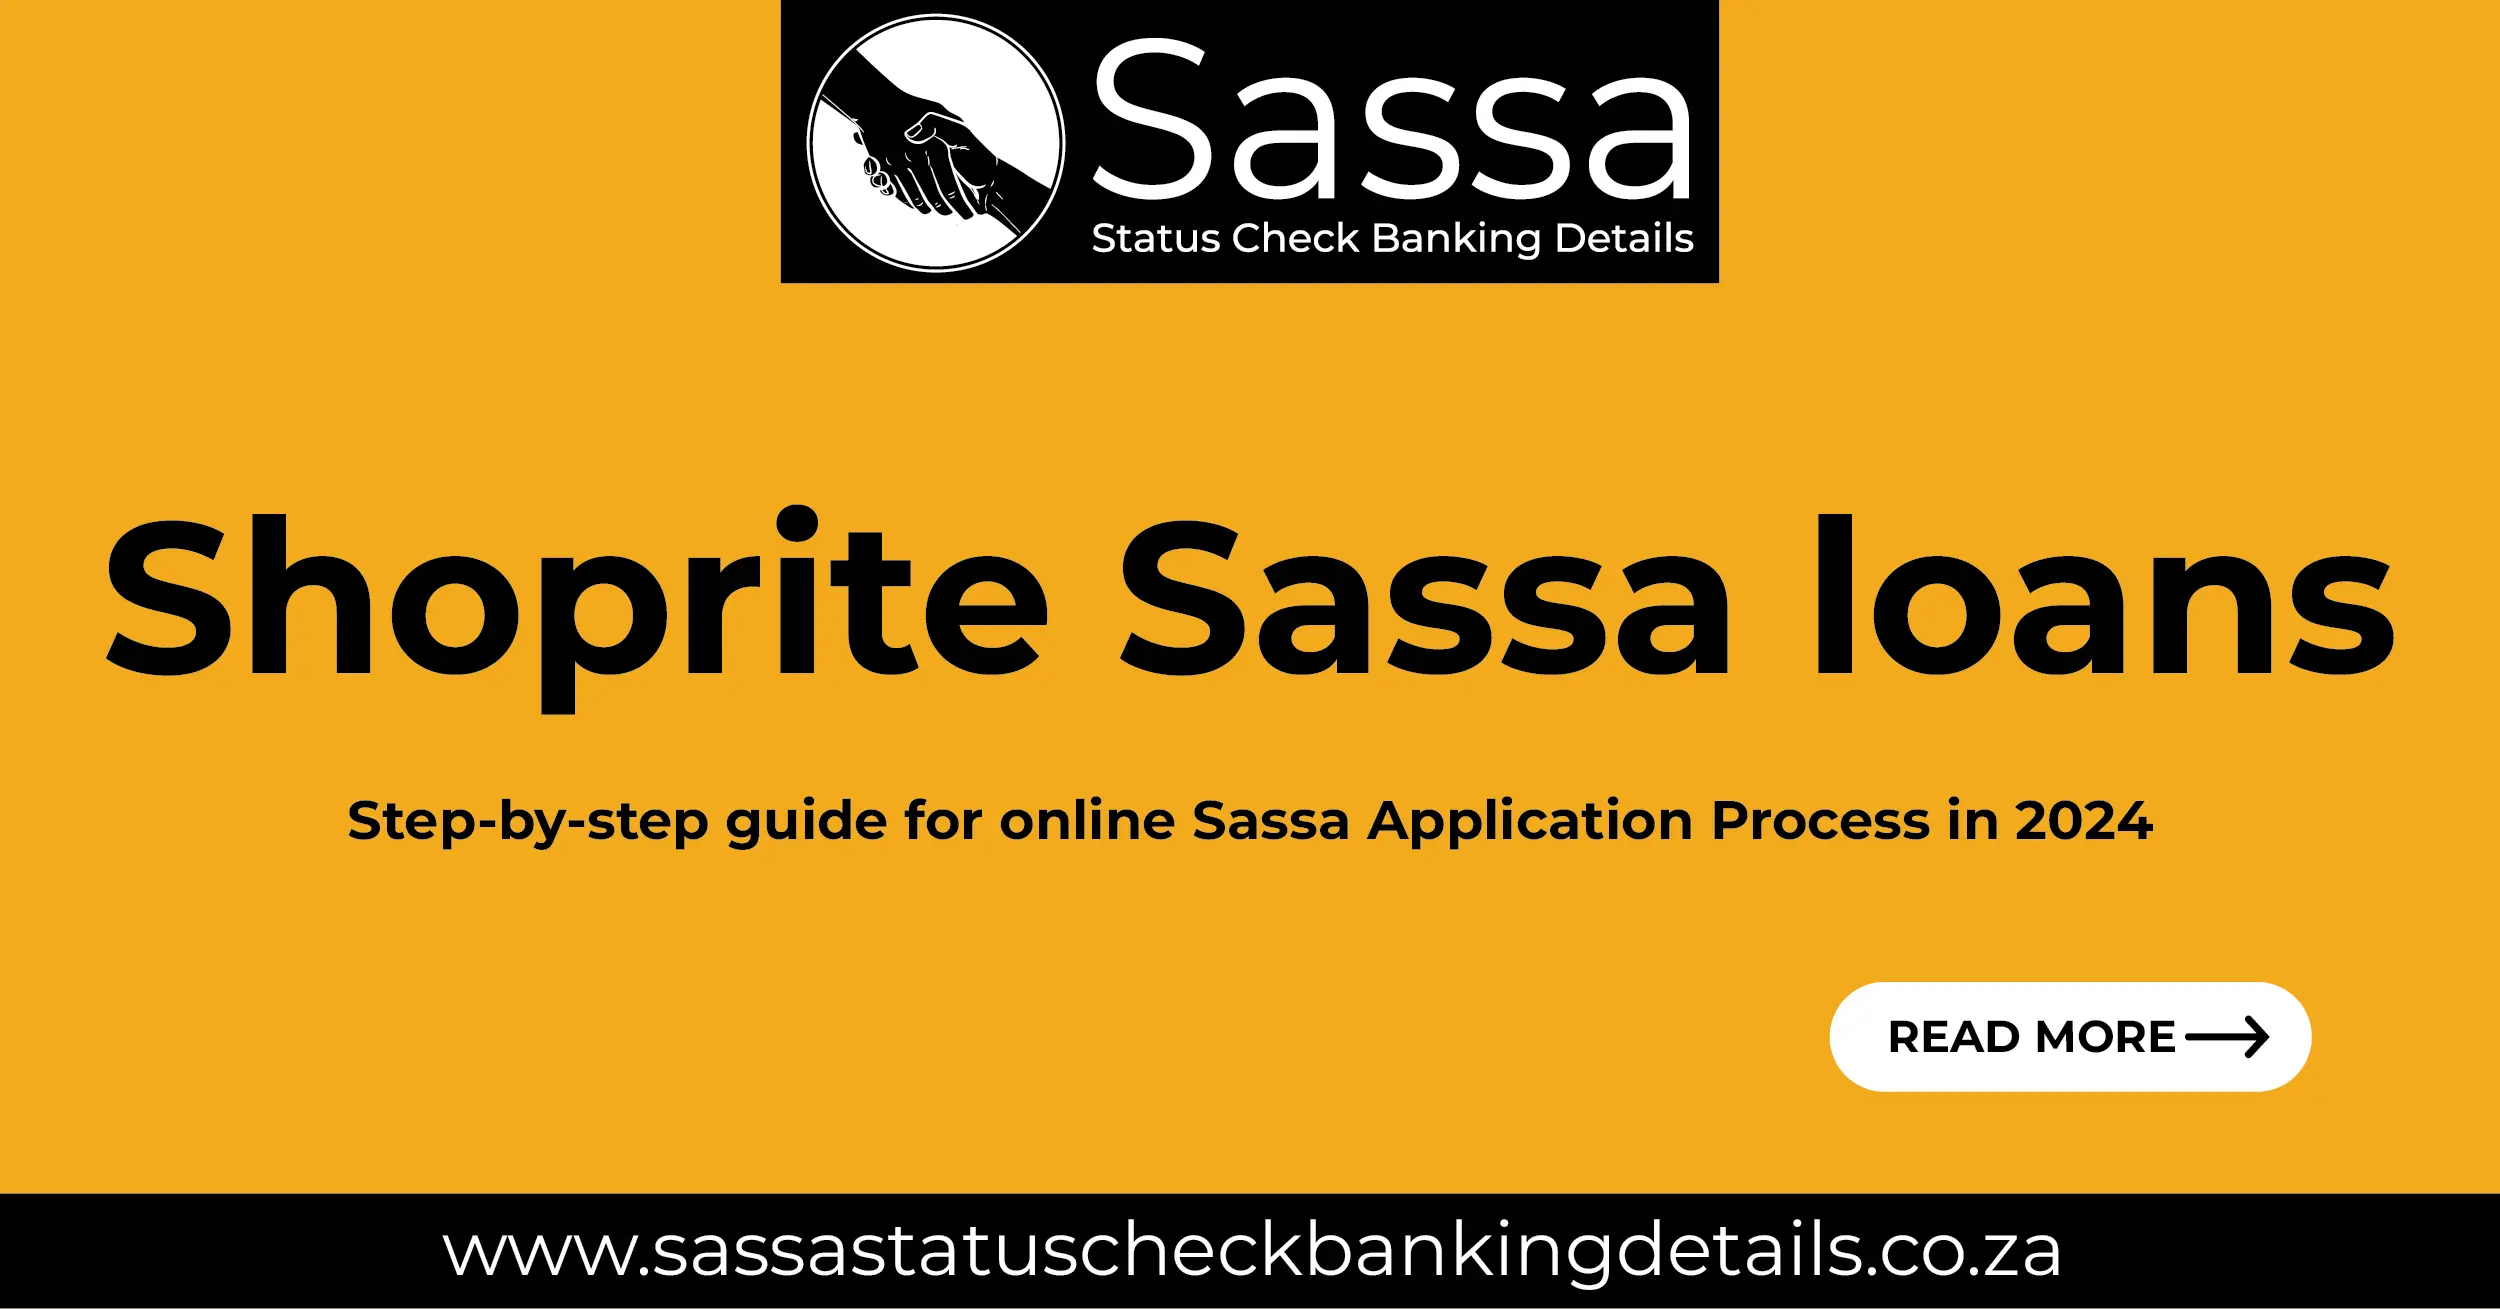 Shoprite Sassa loans: Guide for online Sassa Application Process in 2024